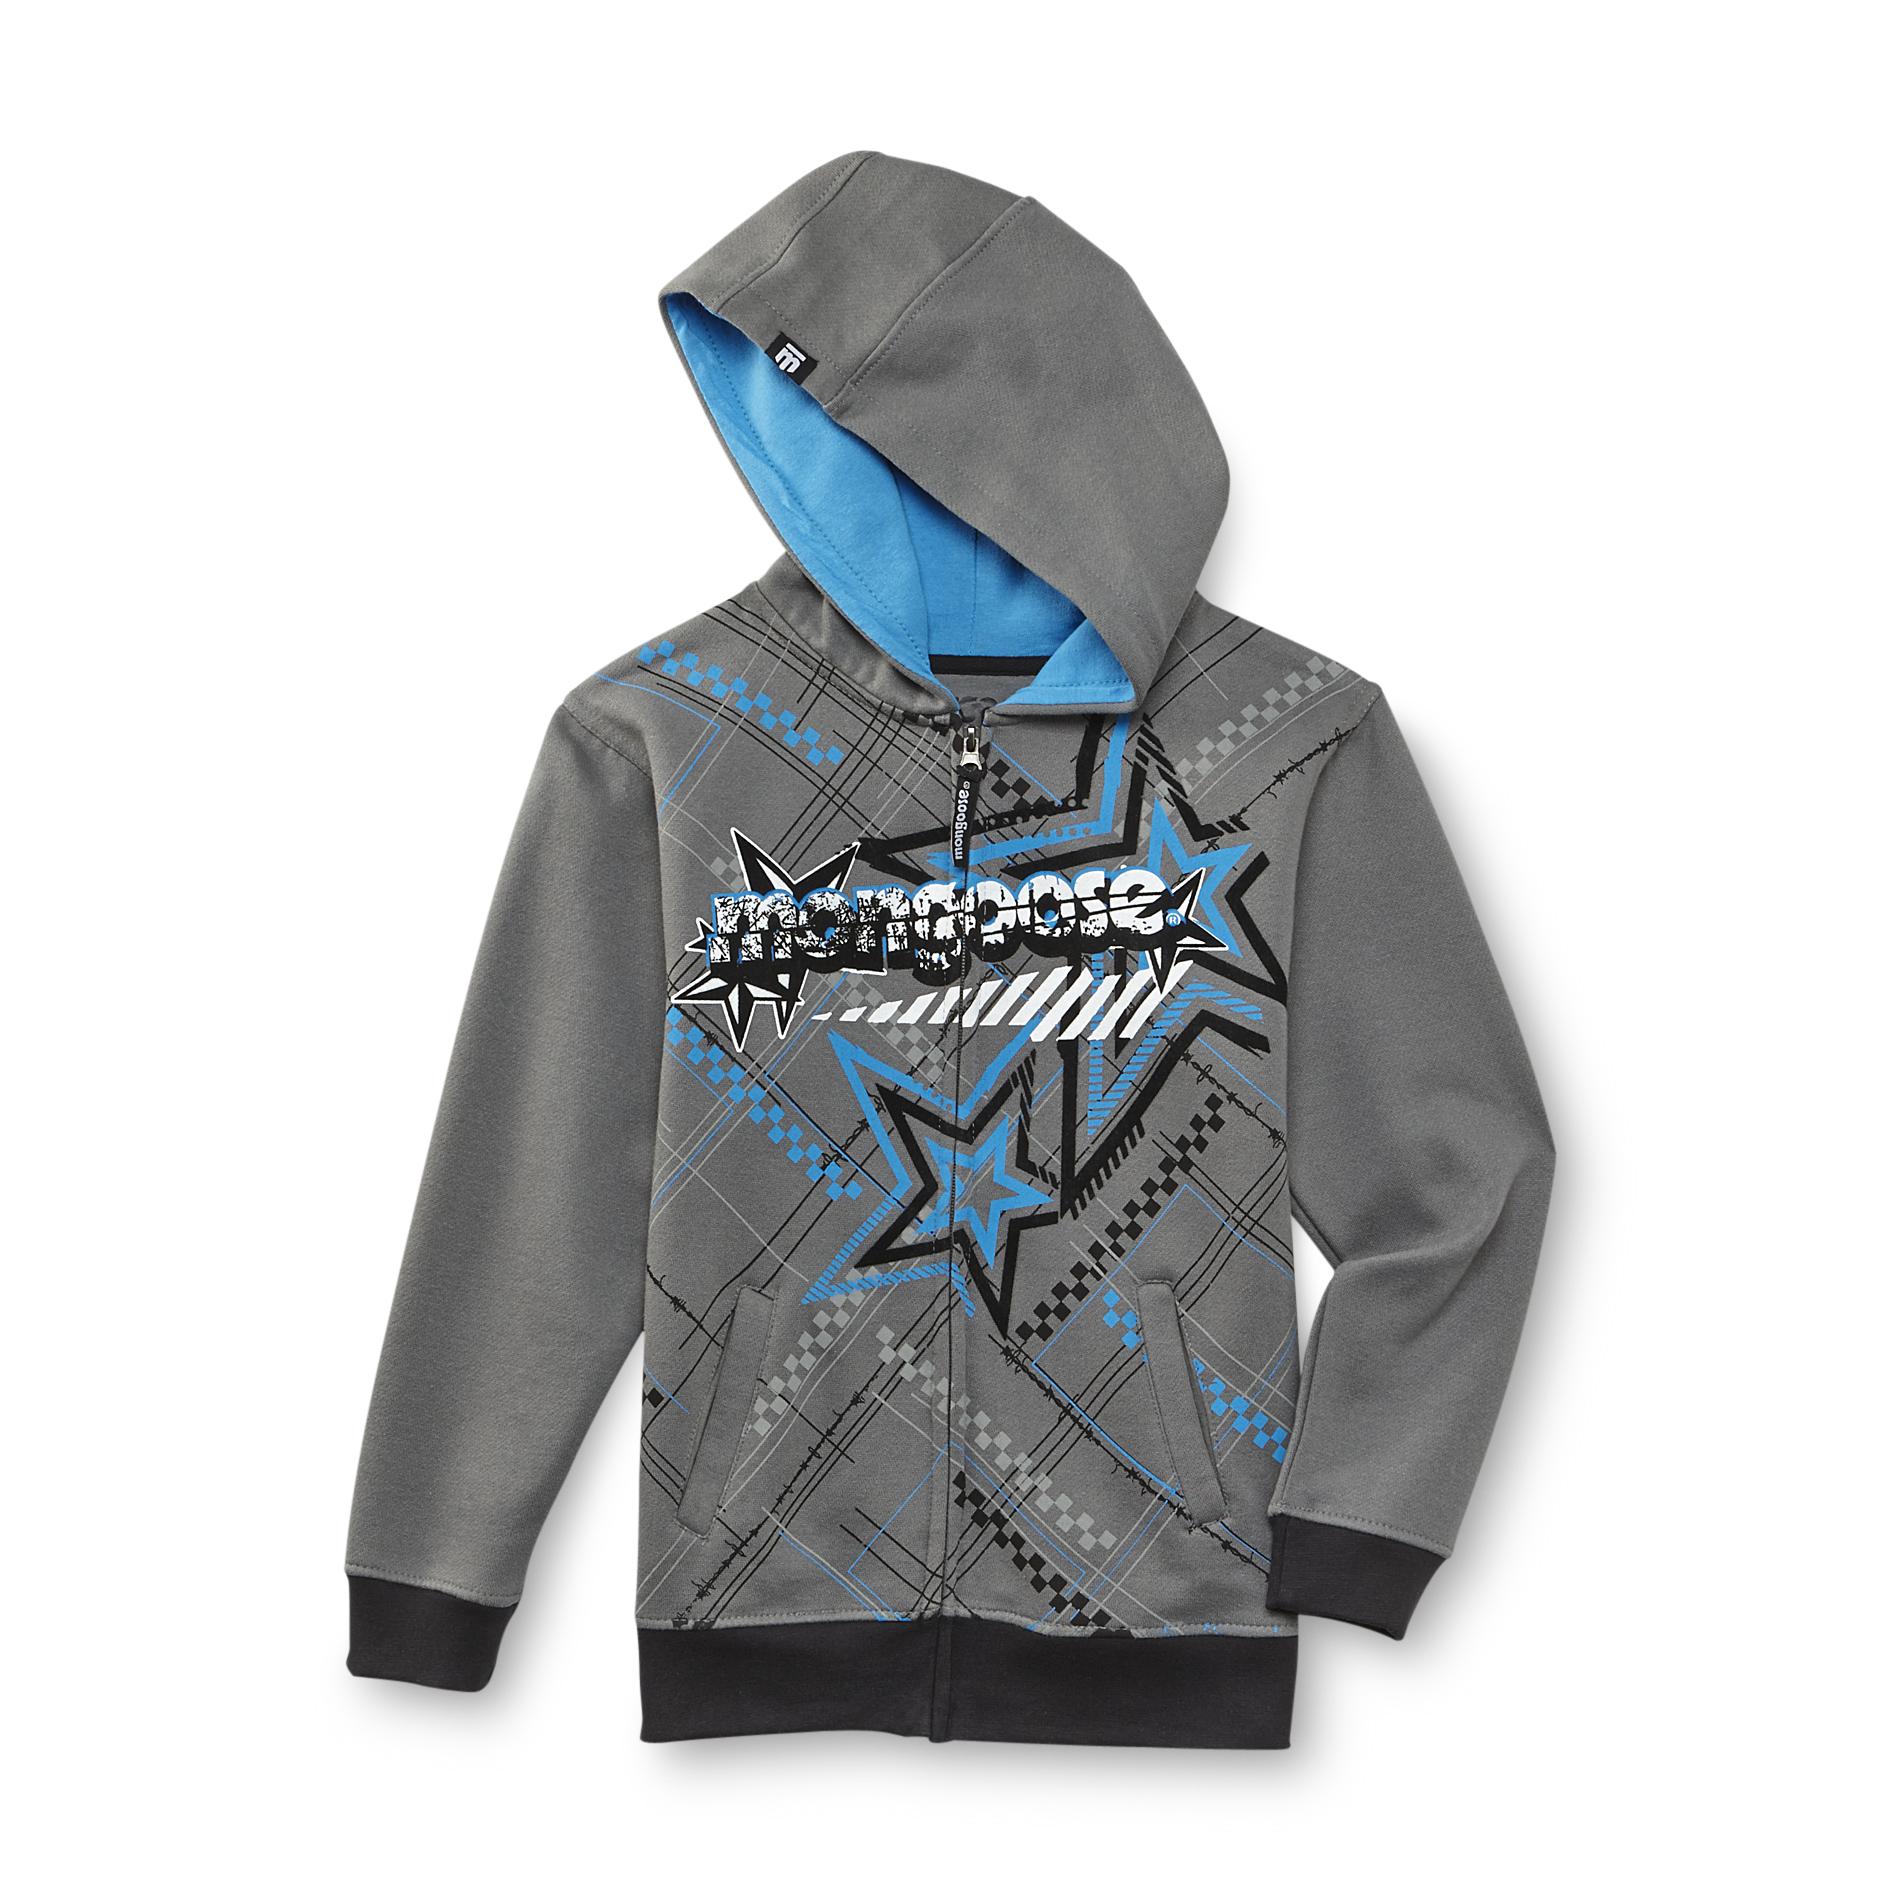 Mongoose Boy's Graphic Hoodie Jacket - Checkered & Stars